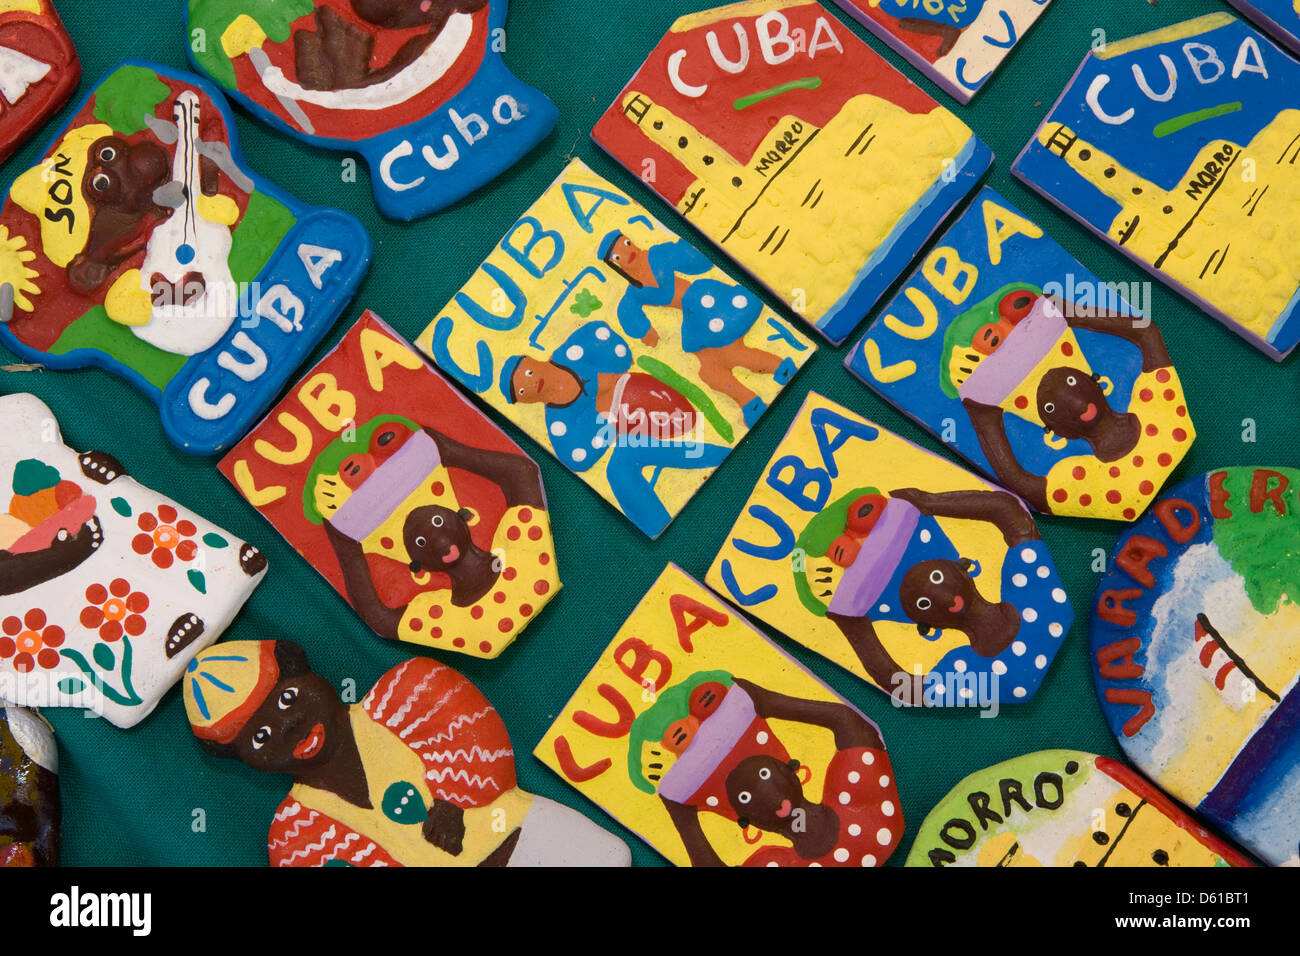 Cuba: souvenirs / fridge magnets Stock Photo - Alamy